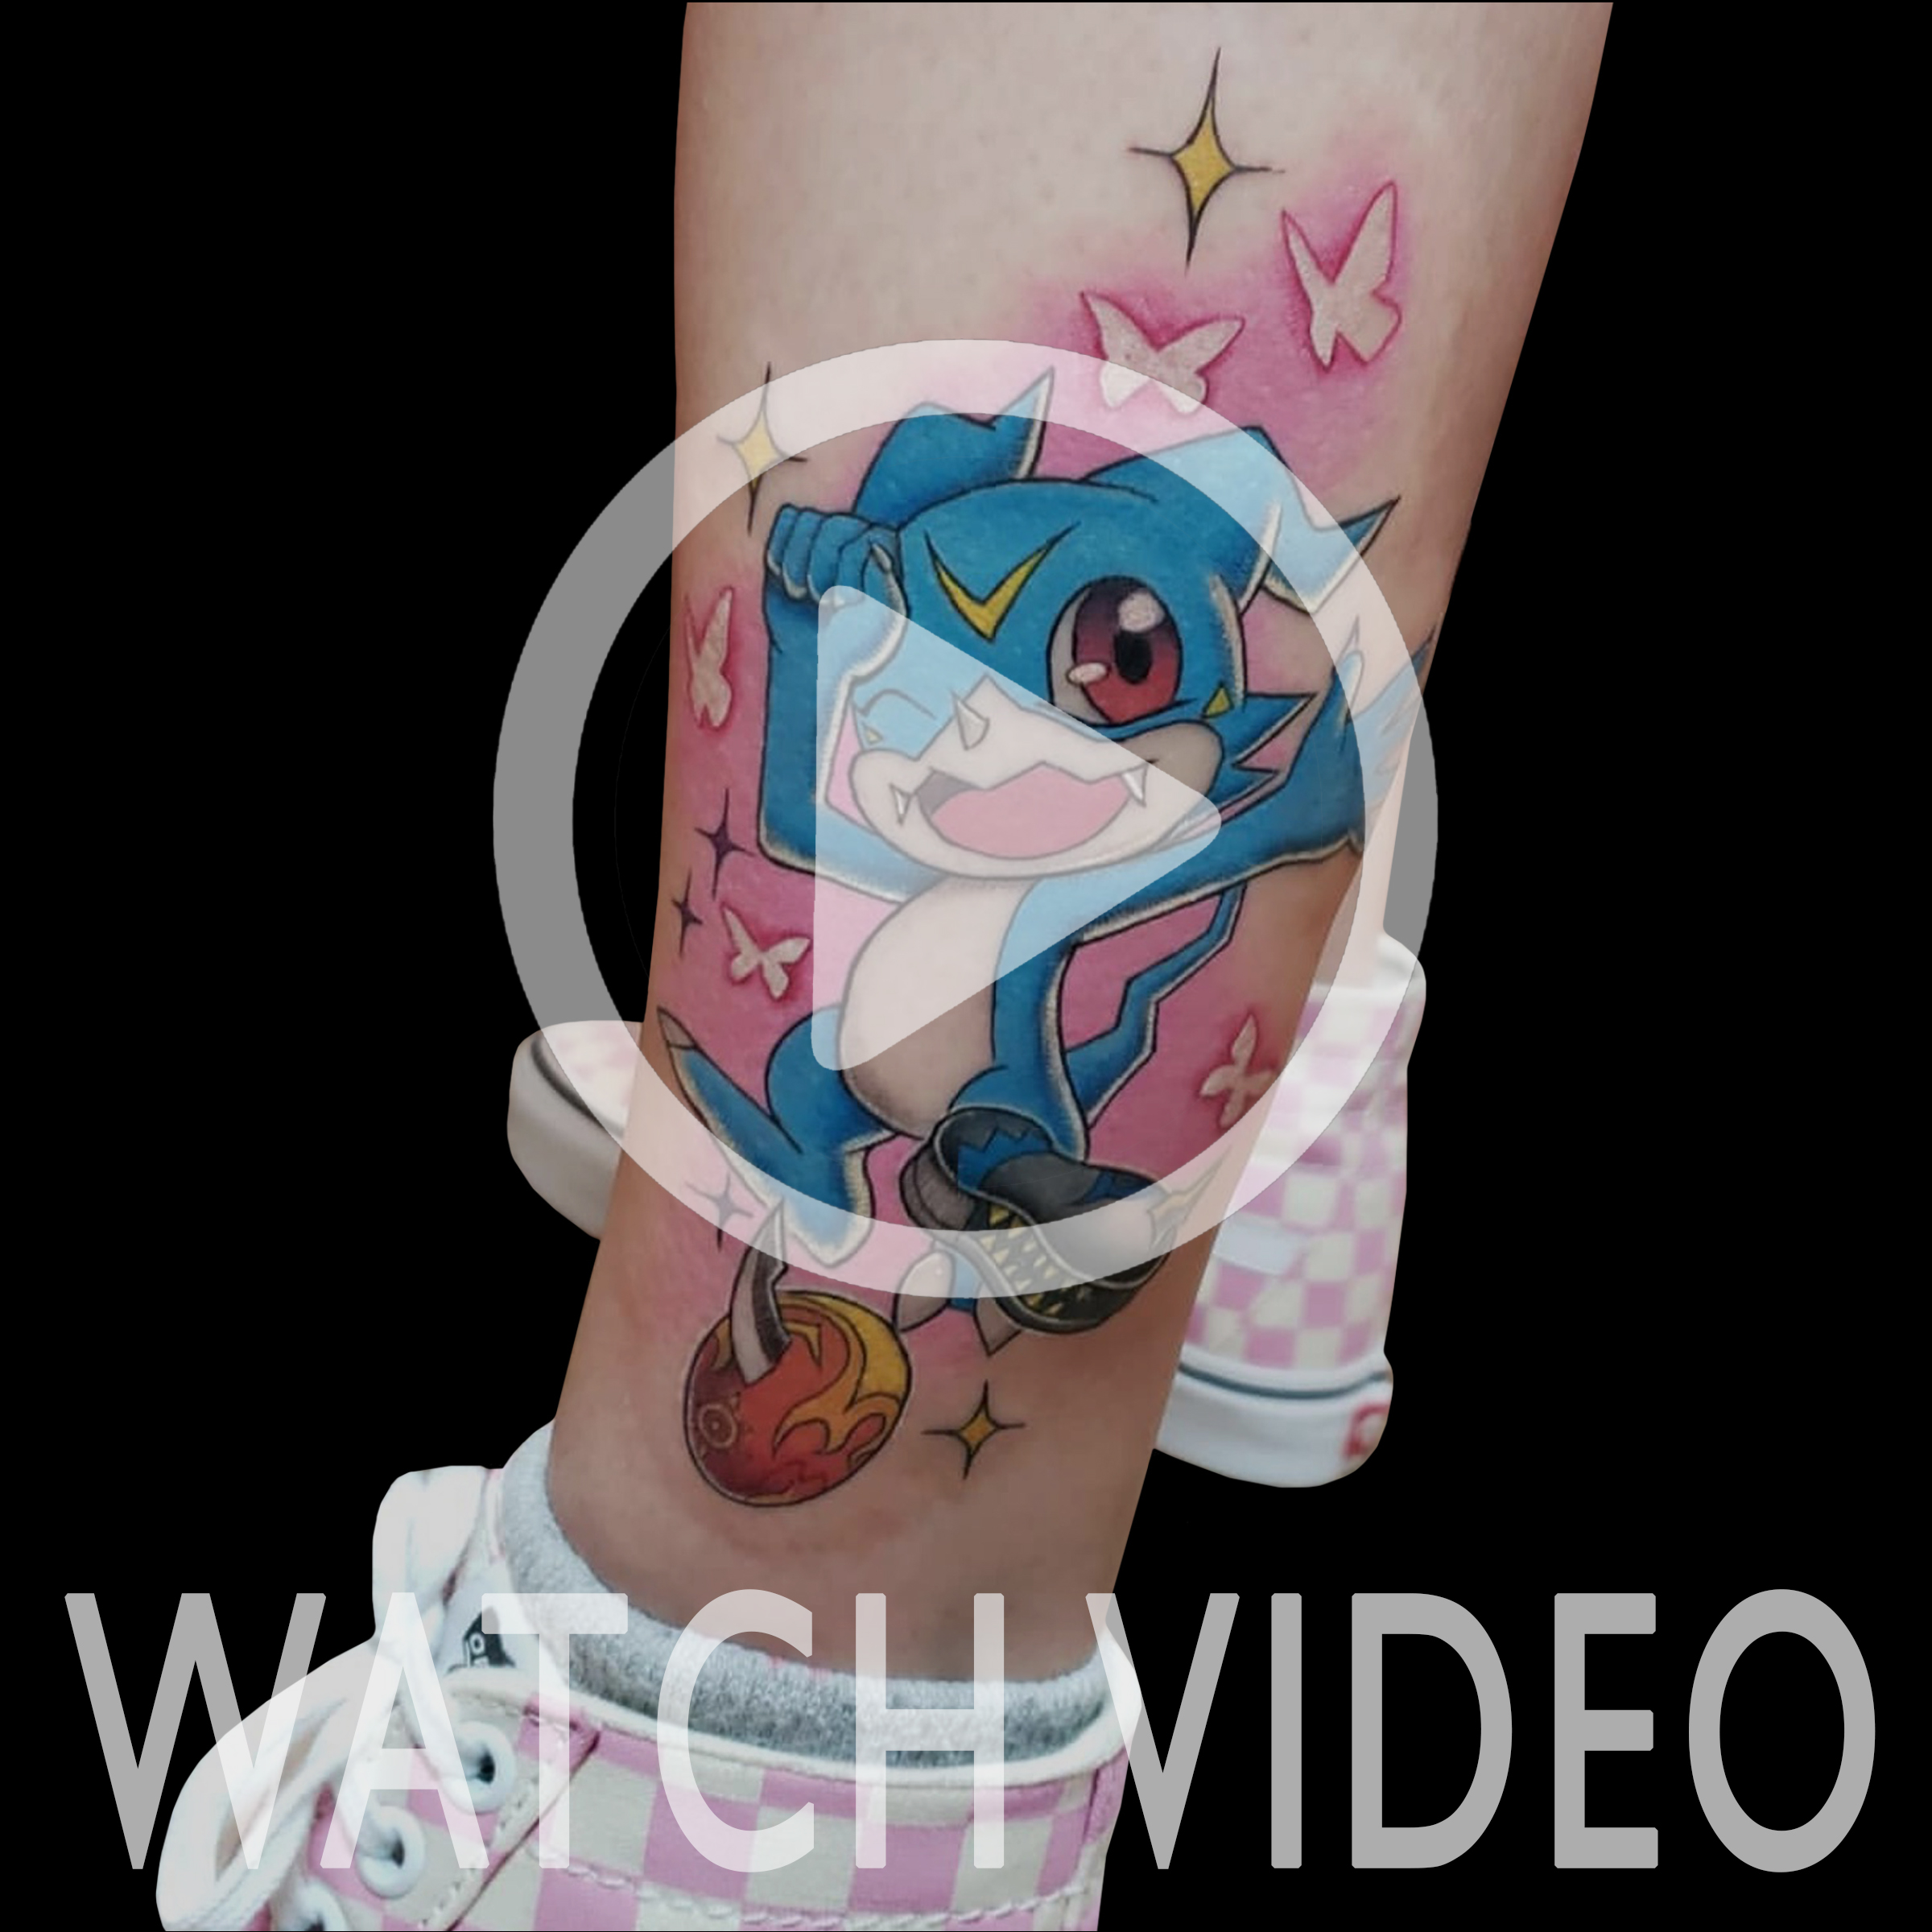 Video of tattoo by Lark Tattoo artist Nasa Tsuchiya - -